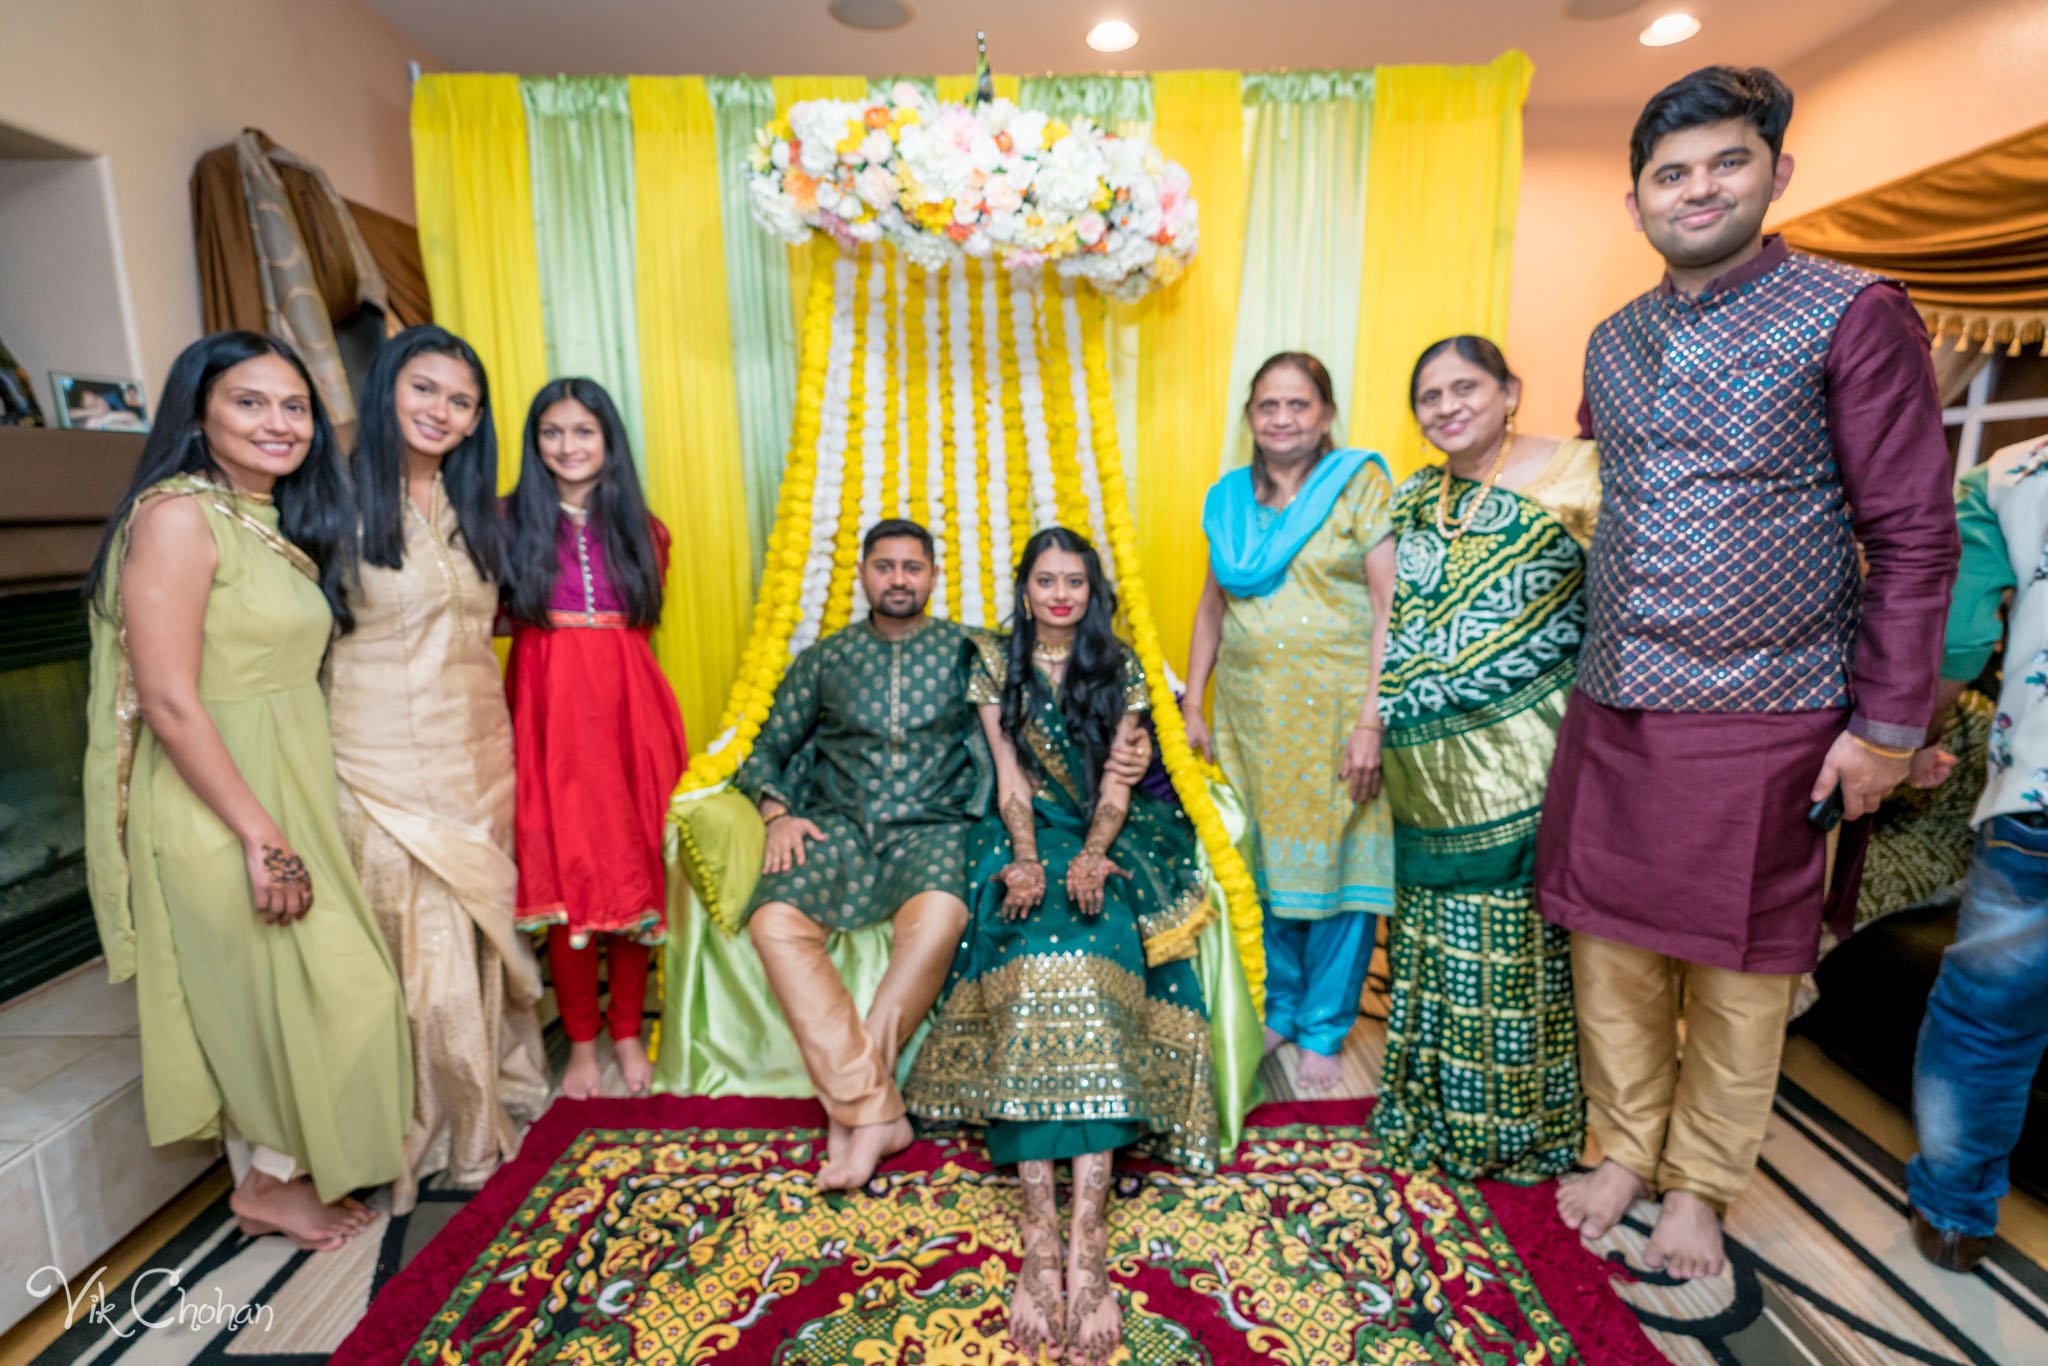 2022-02-03-Hely-&-Parth-Mendi-Indian-Wedding-Vik-Chohan-Photography-Photo-Booth-Social-Media-VCP-151.jpg